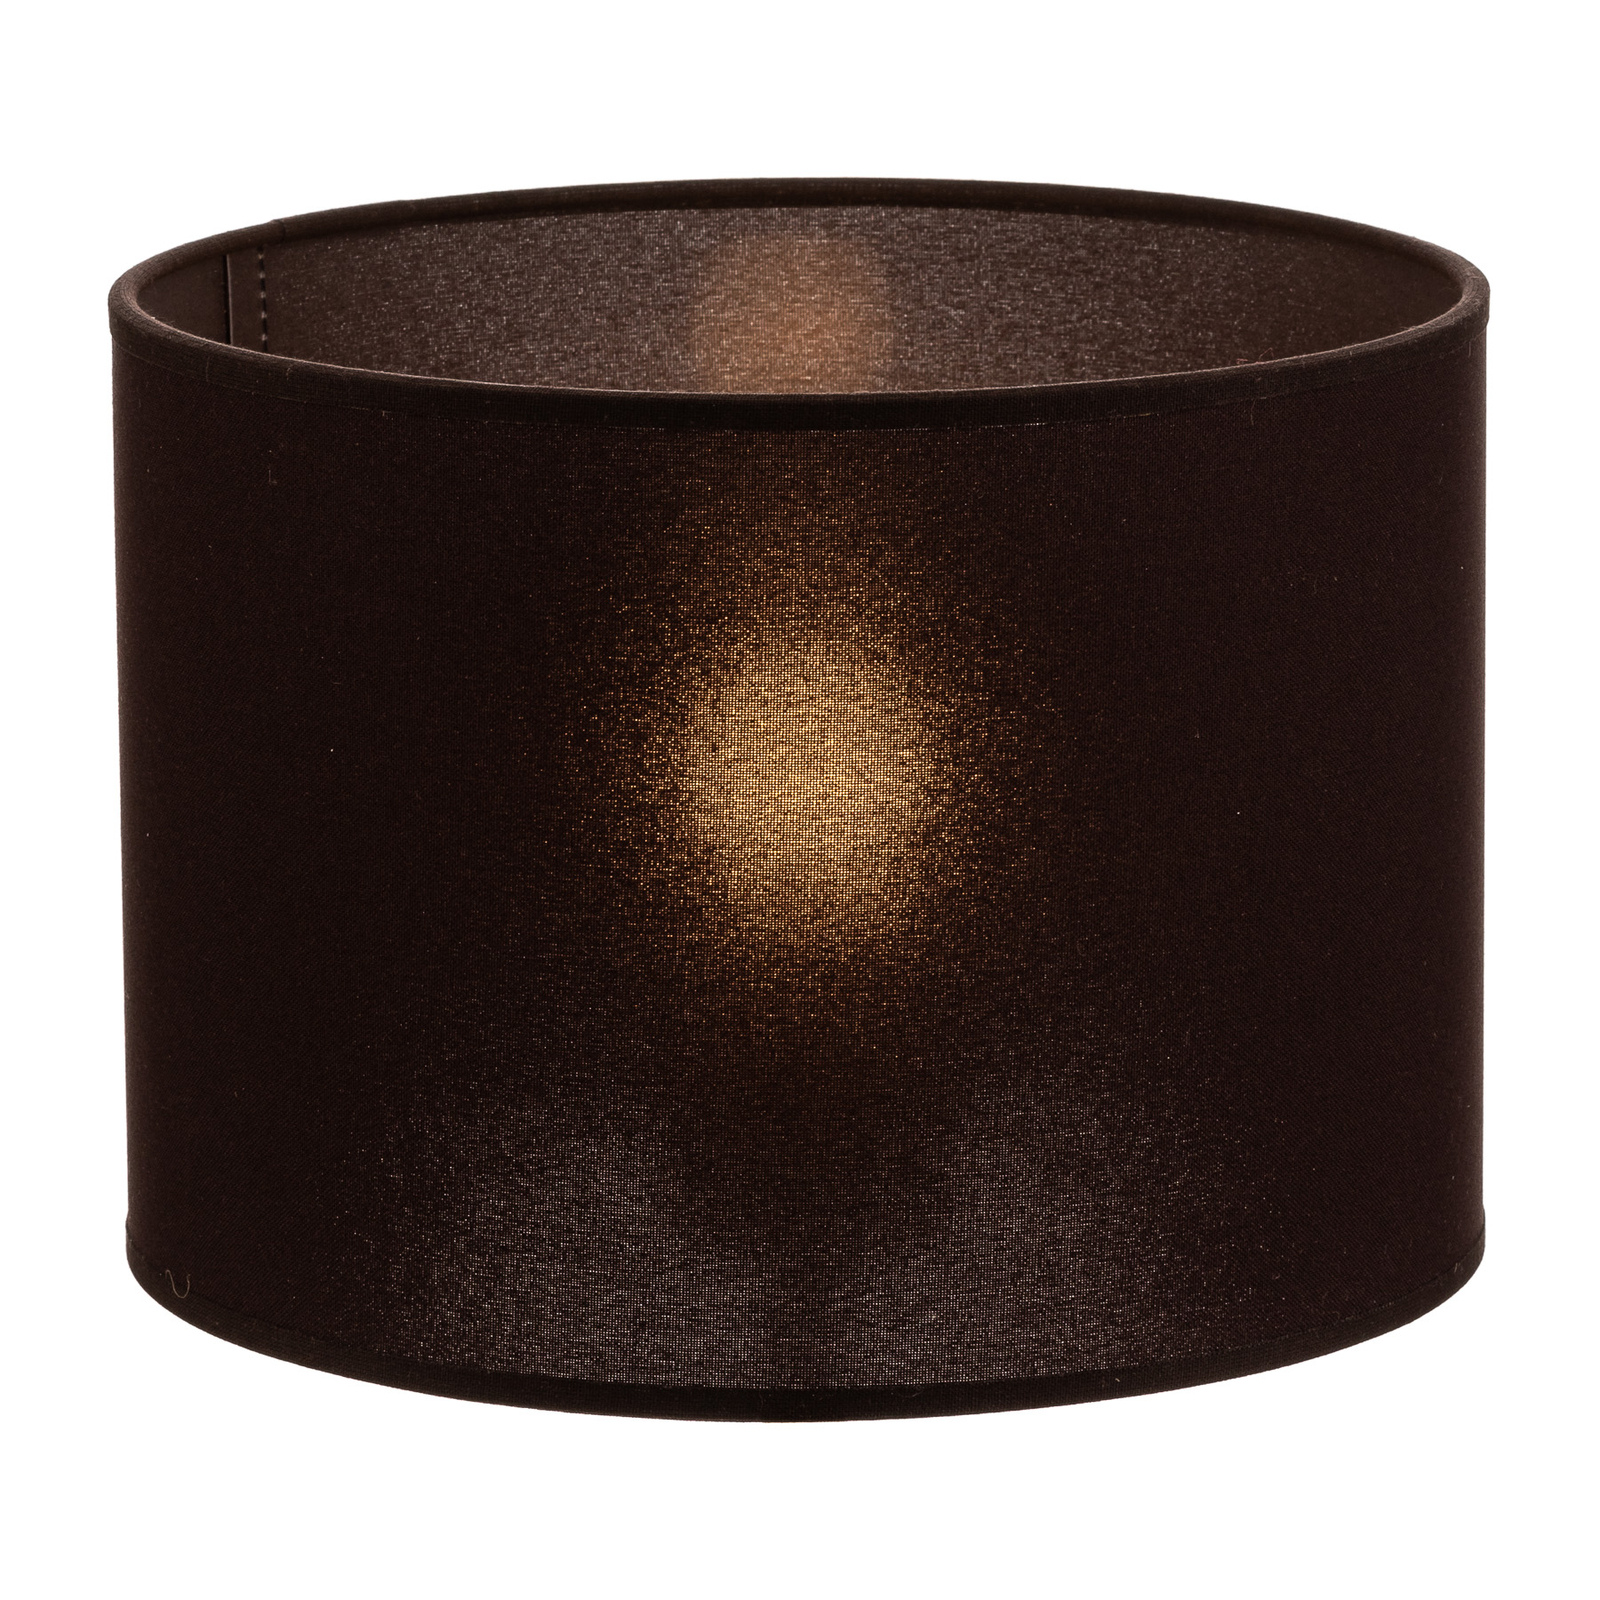 Roller lampshade dark brown Ø 25 cm height 18 cm